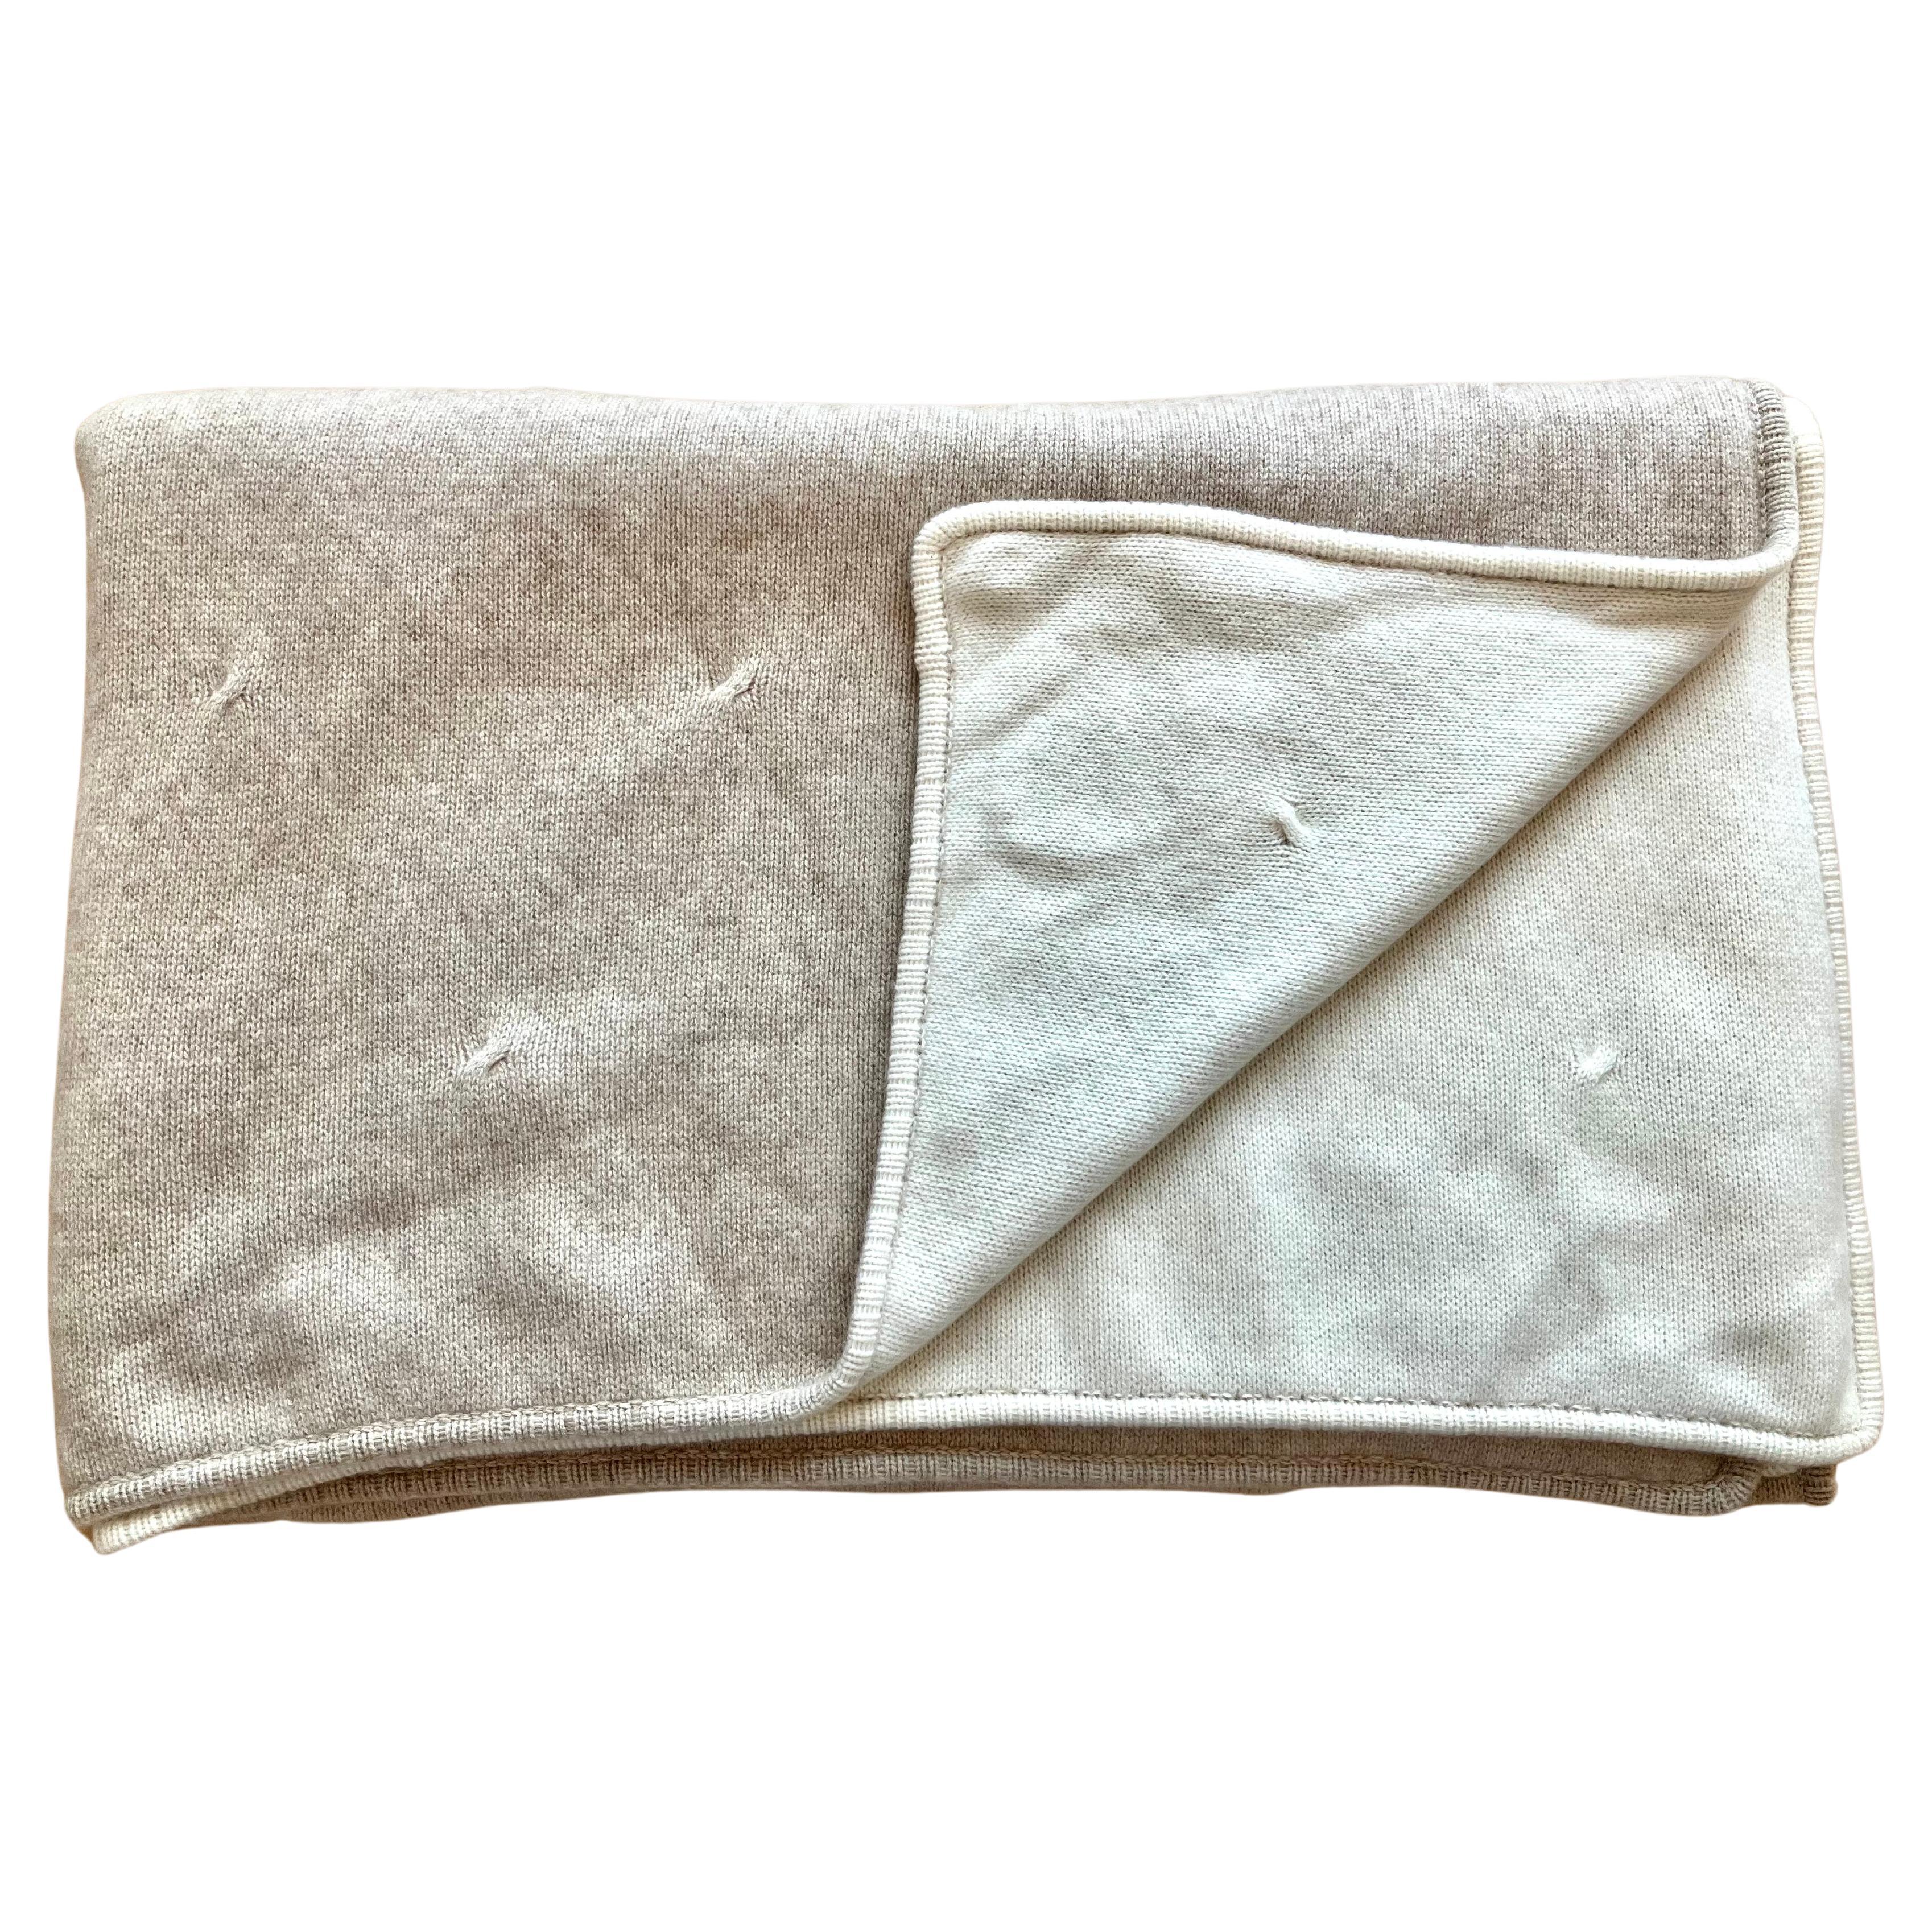 Pure White Cashmere Blanket by Corte di Kel, 200×140cm Luxurious Italian Blanket